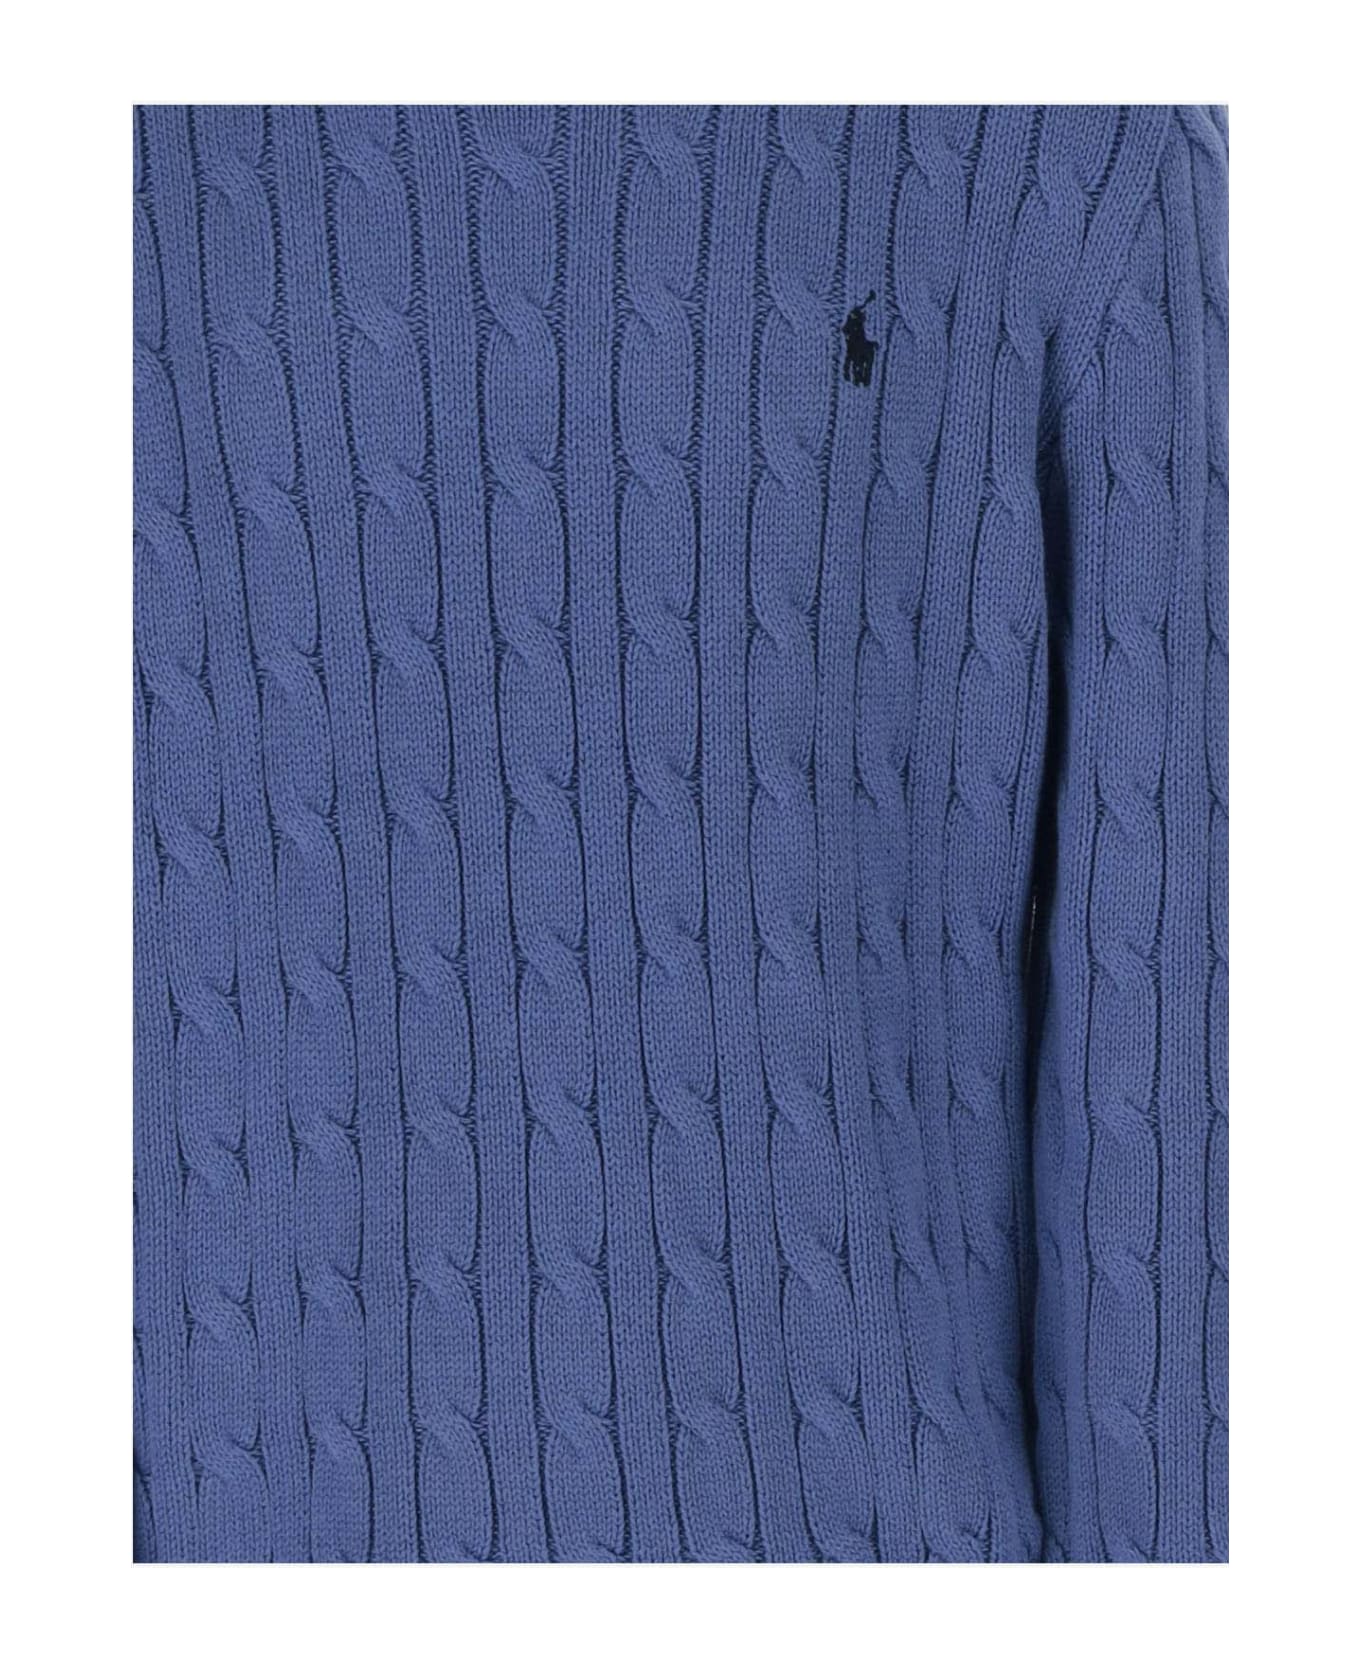 Ralph Lauren Cotton Sweater With Logo - Blu